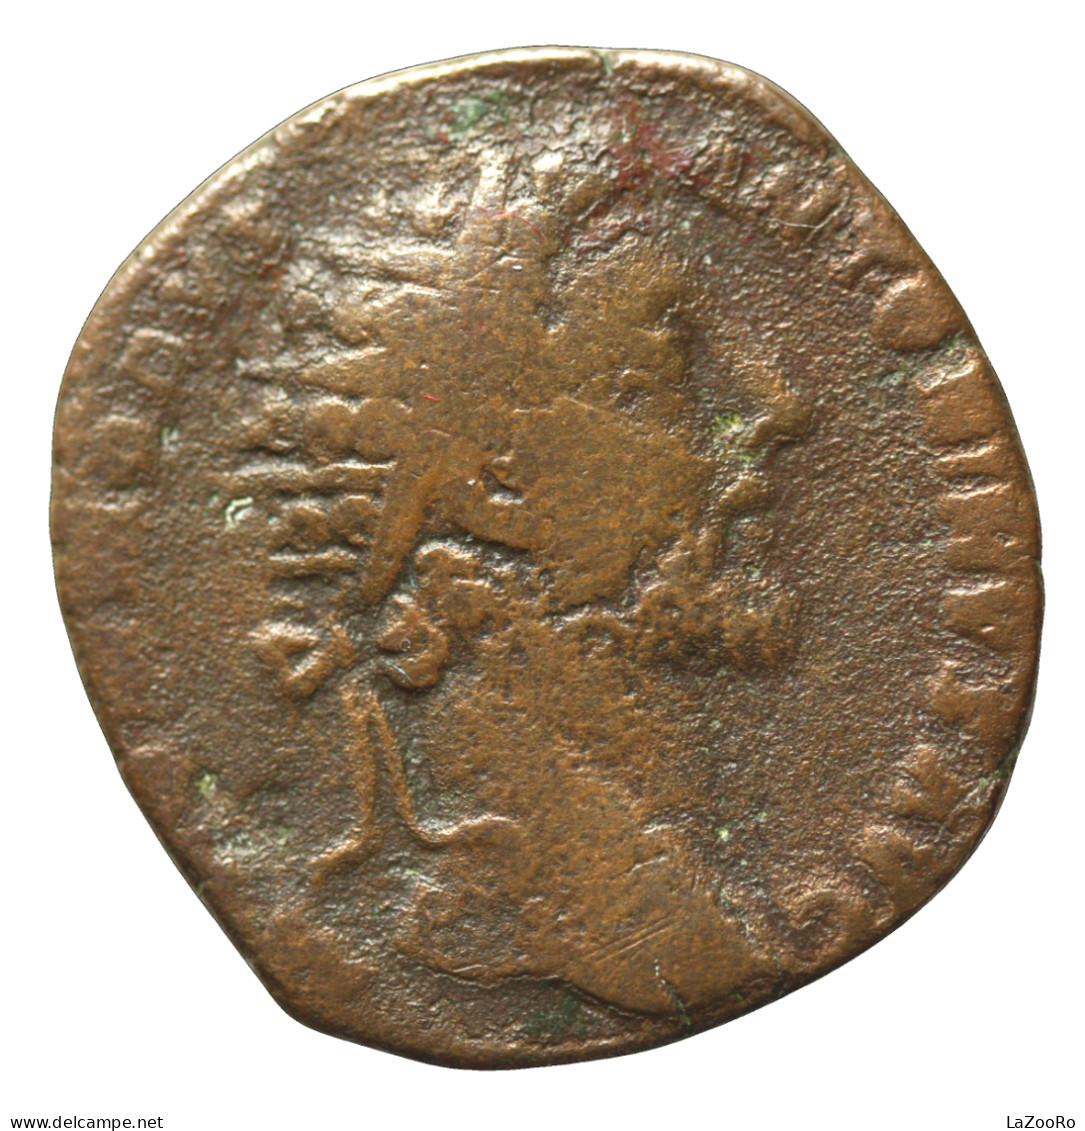 LaZooRo: Roman Empire - AE Sestertius Of Commodus (177-192 AD), Roma - La Dinastía Antonina (96 / 192)